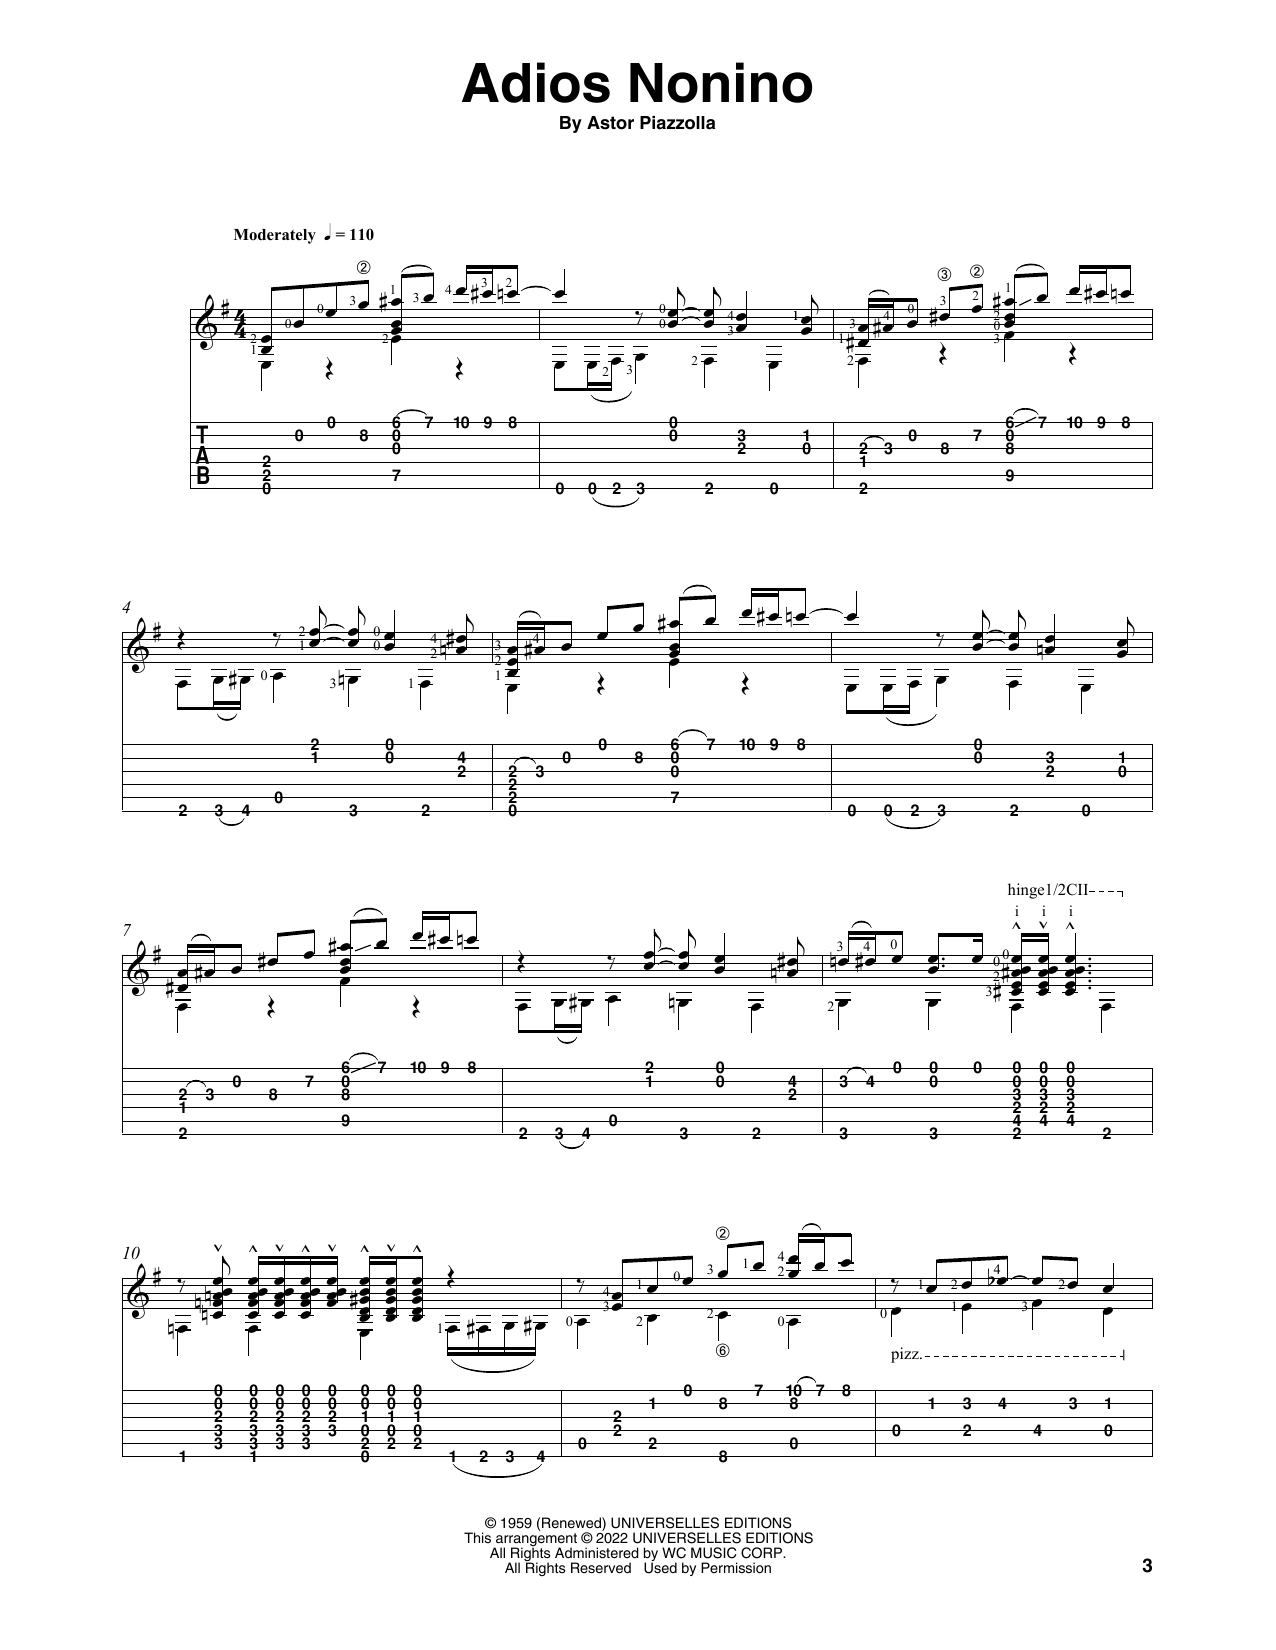 Astor Piazzolla Adios Nonino (arr. Celil Refik Kaya) Sheet Music Notes & Chords for Solo Guitar - Download or Print PDF